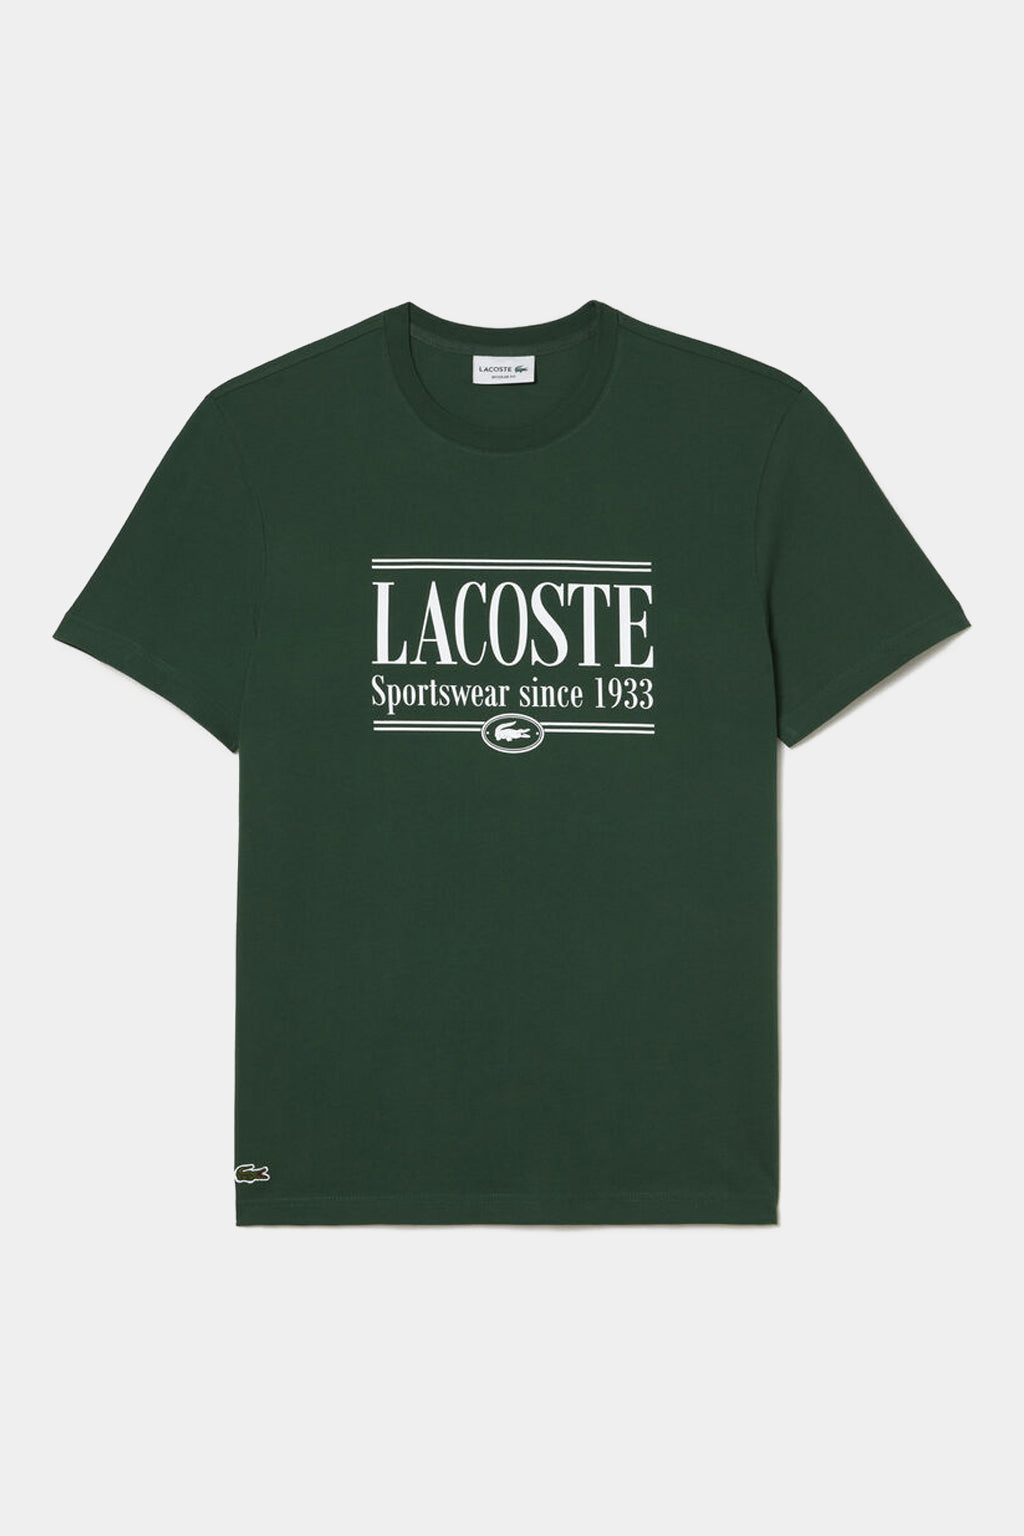 Lacoste - Men's Lacoste Regular Fit Jersey T-shirt